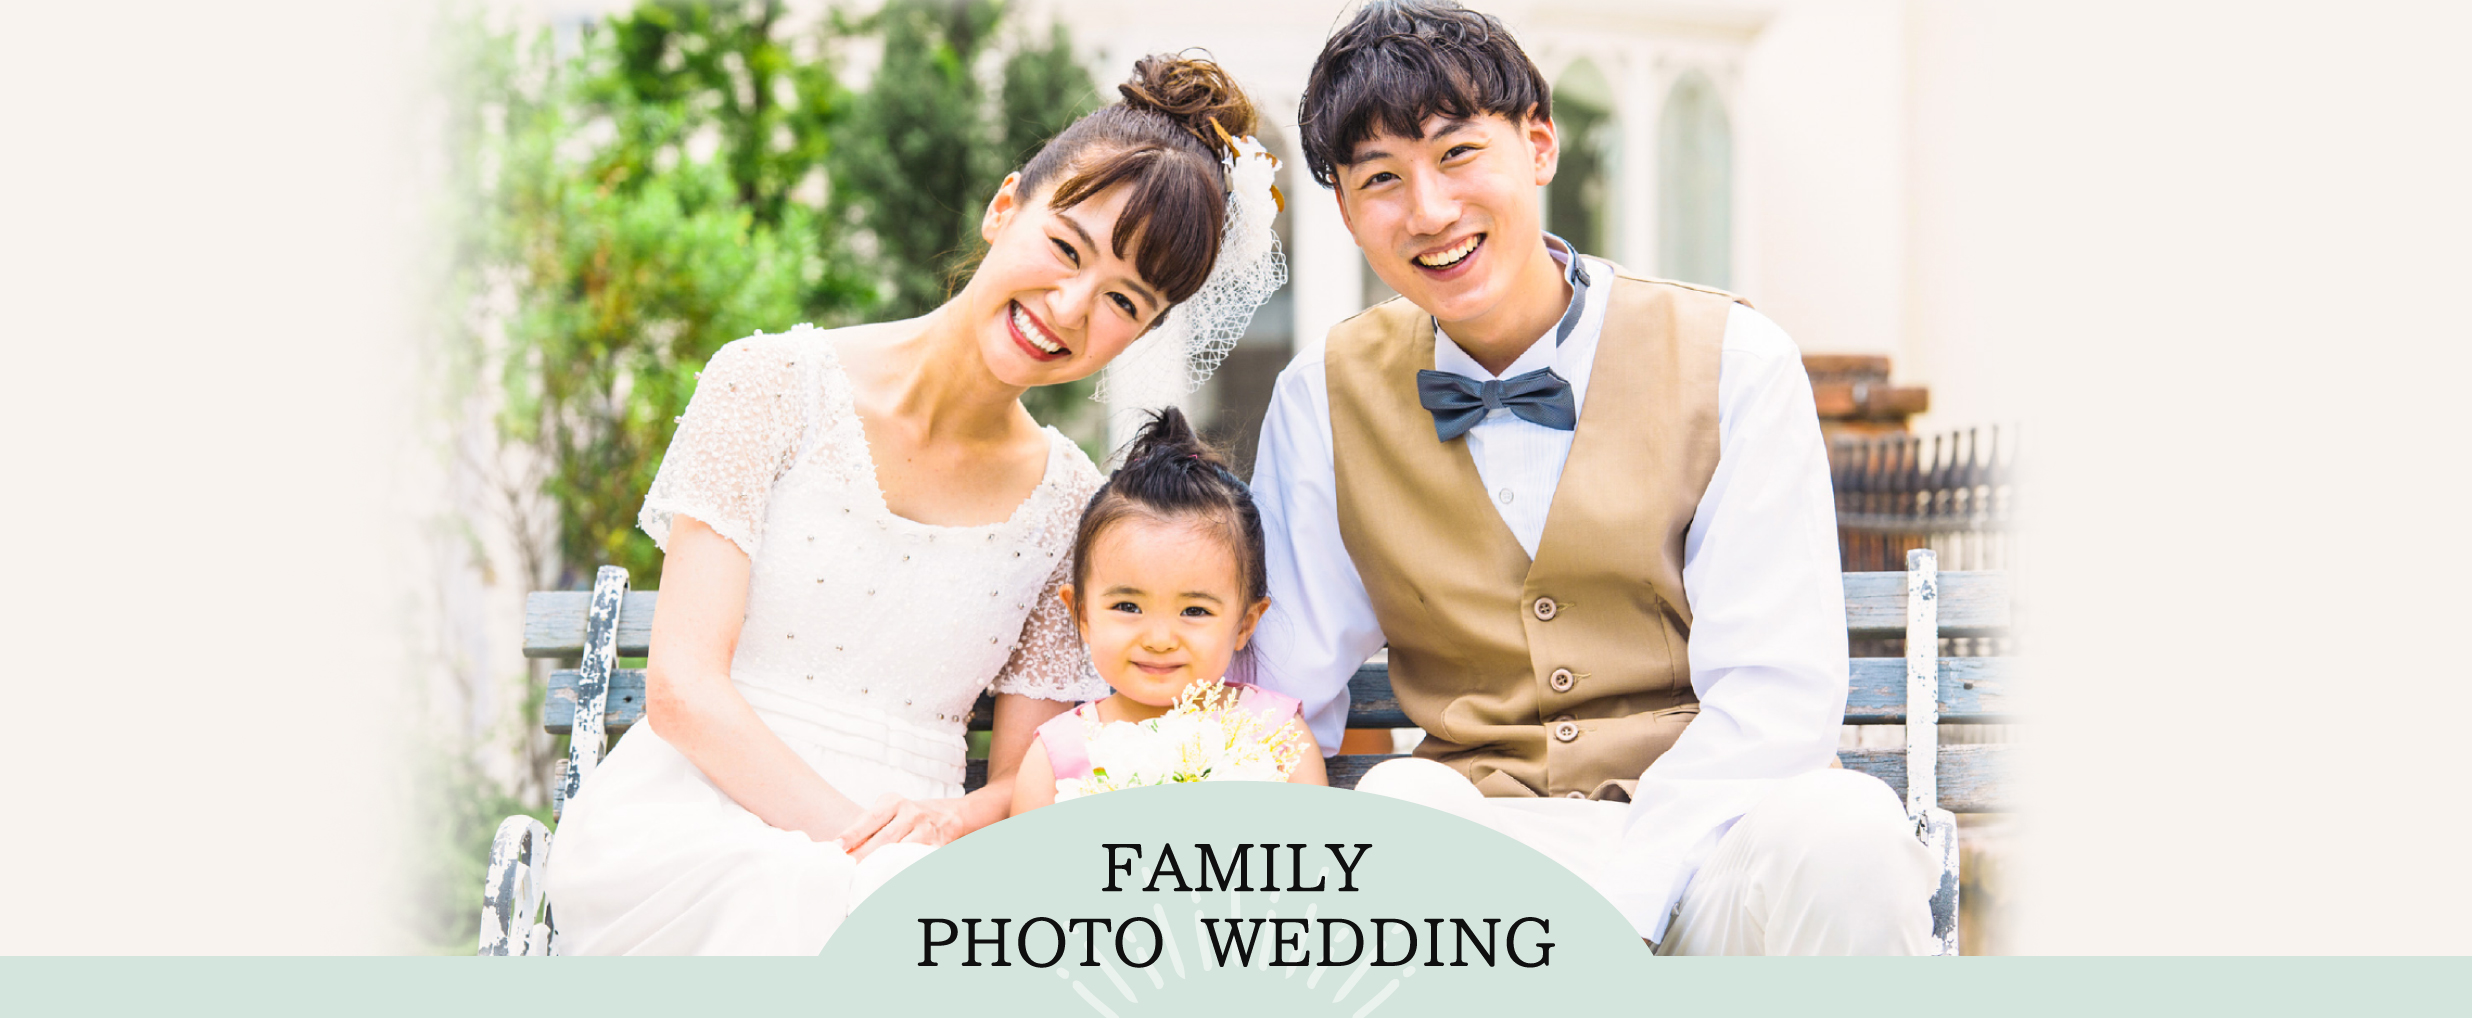 FAMILY PHOTO WEDDING